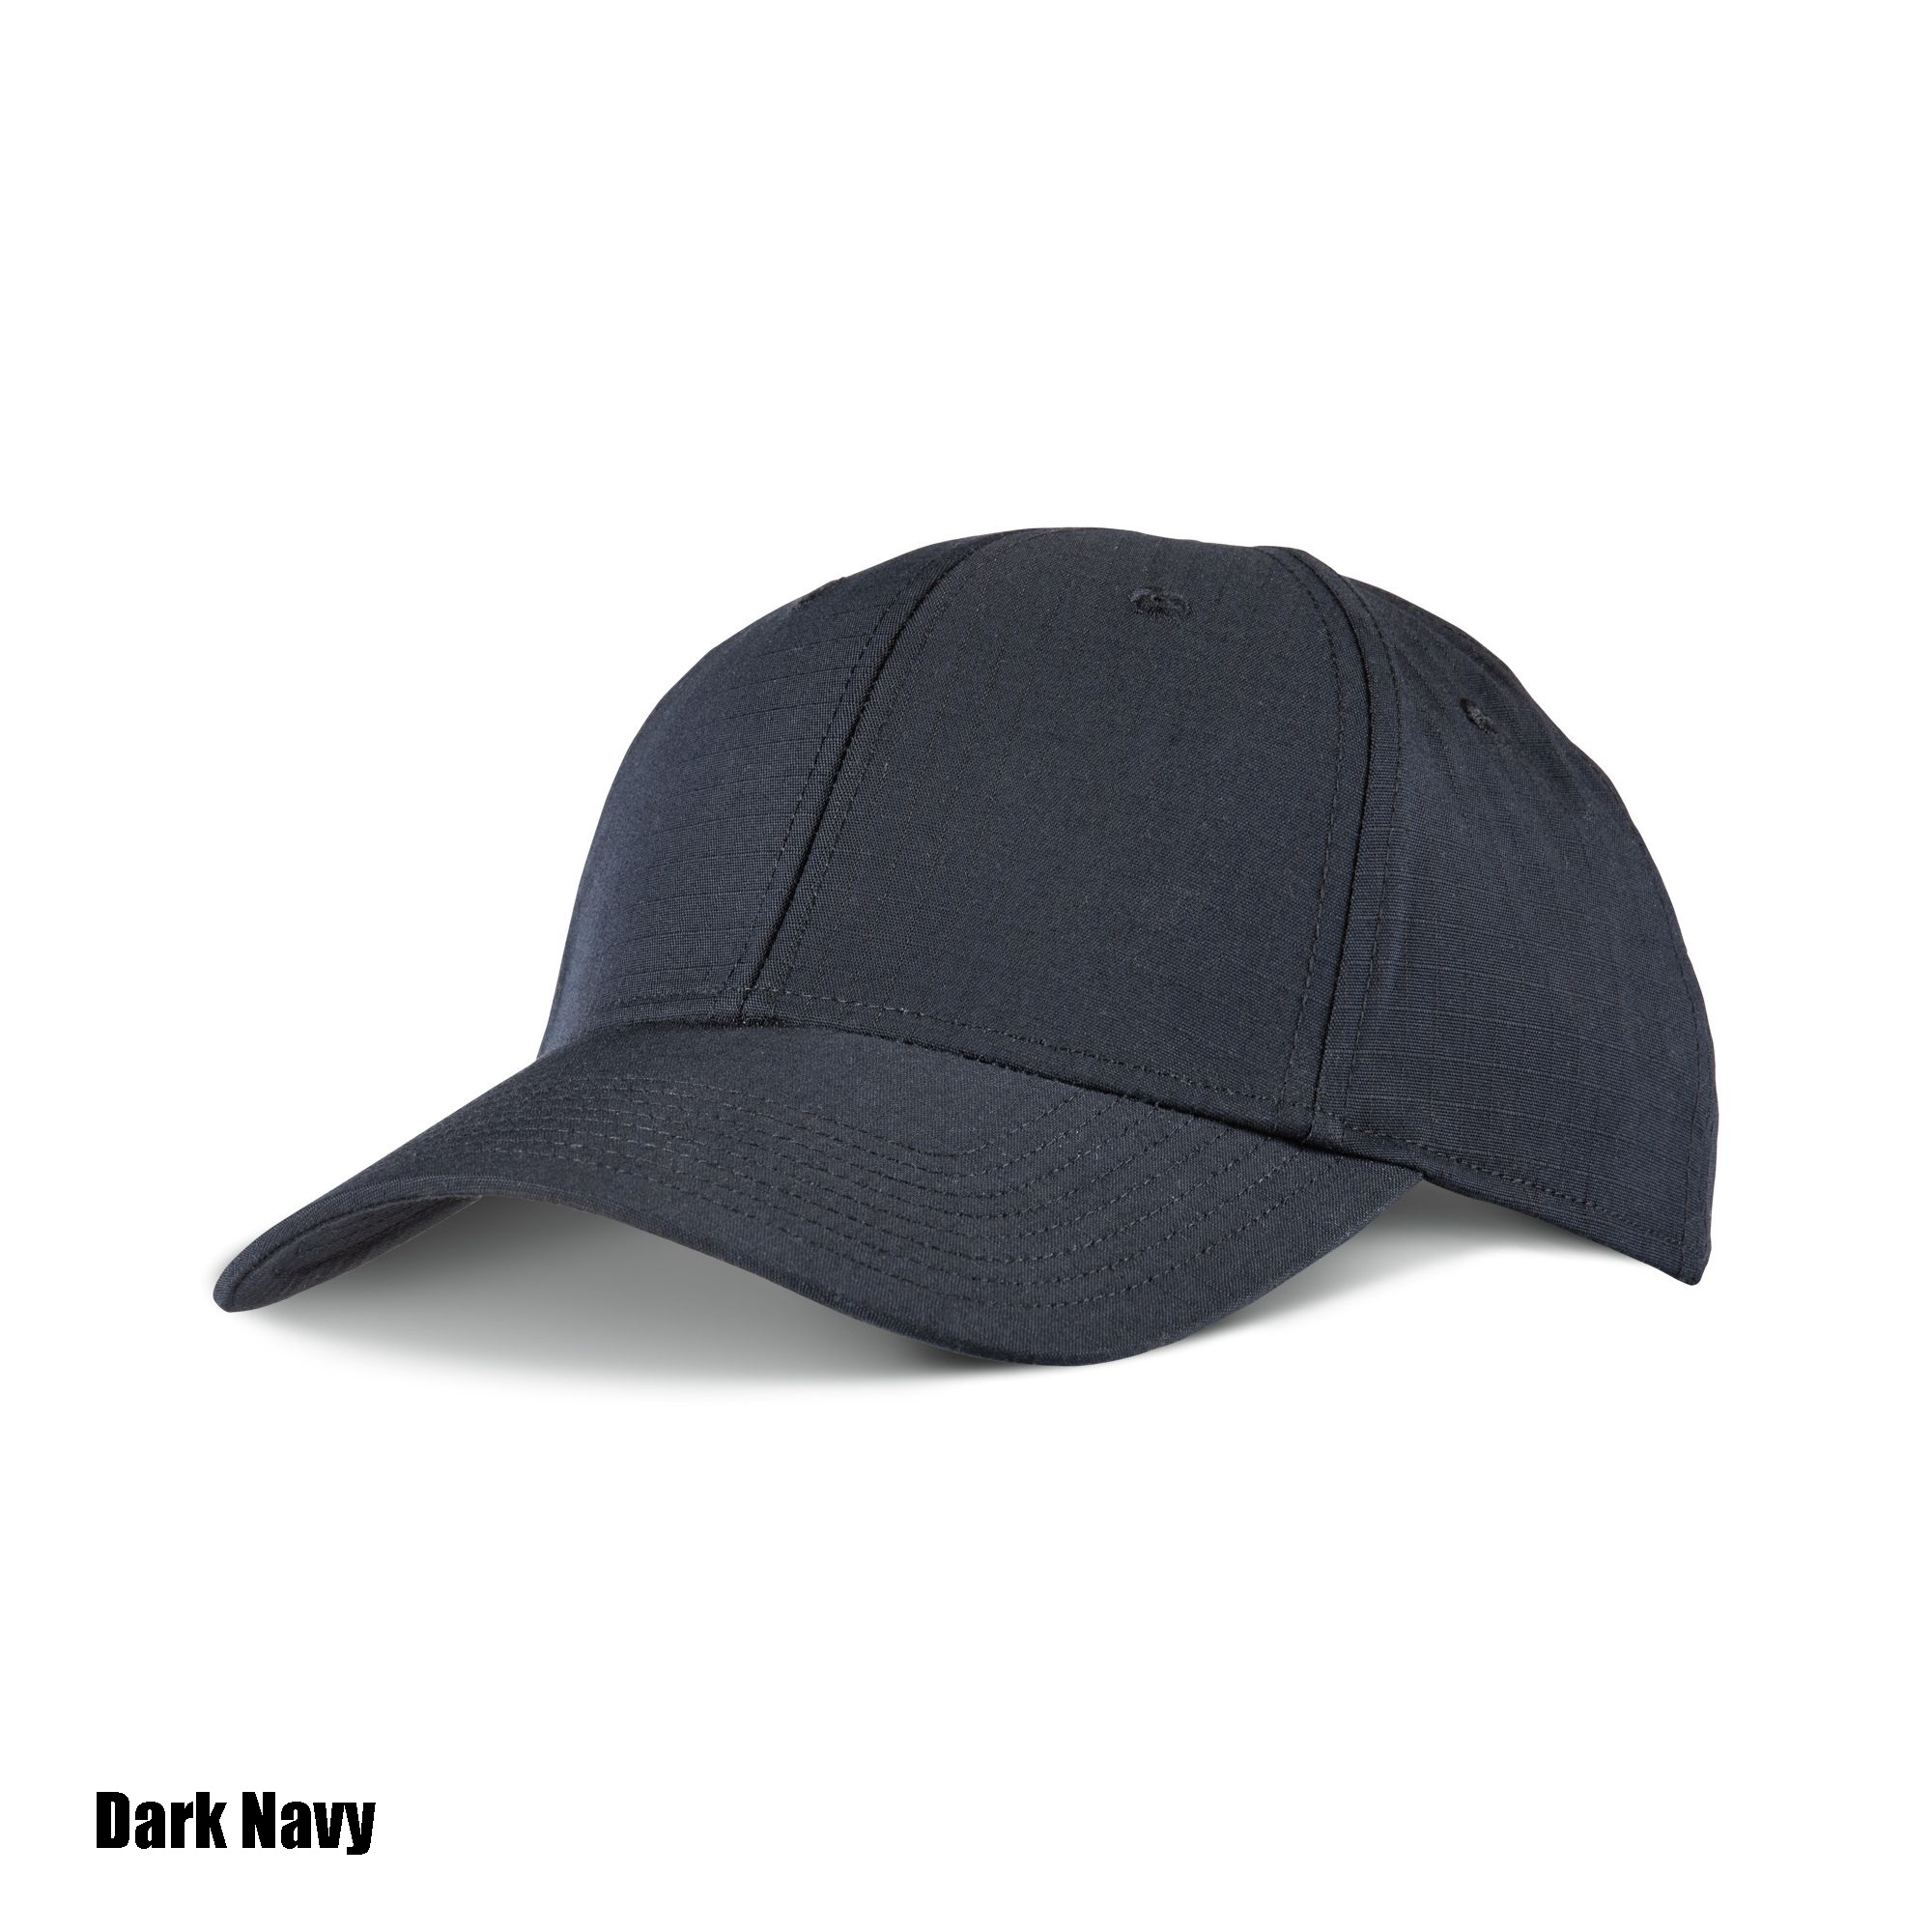 5.11 Fast-Tac Uniform Hat